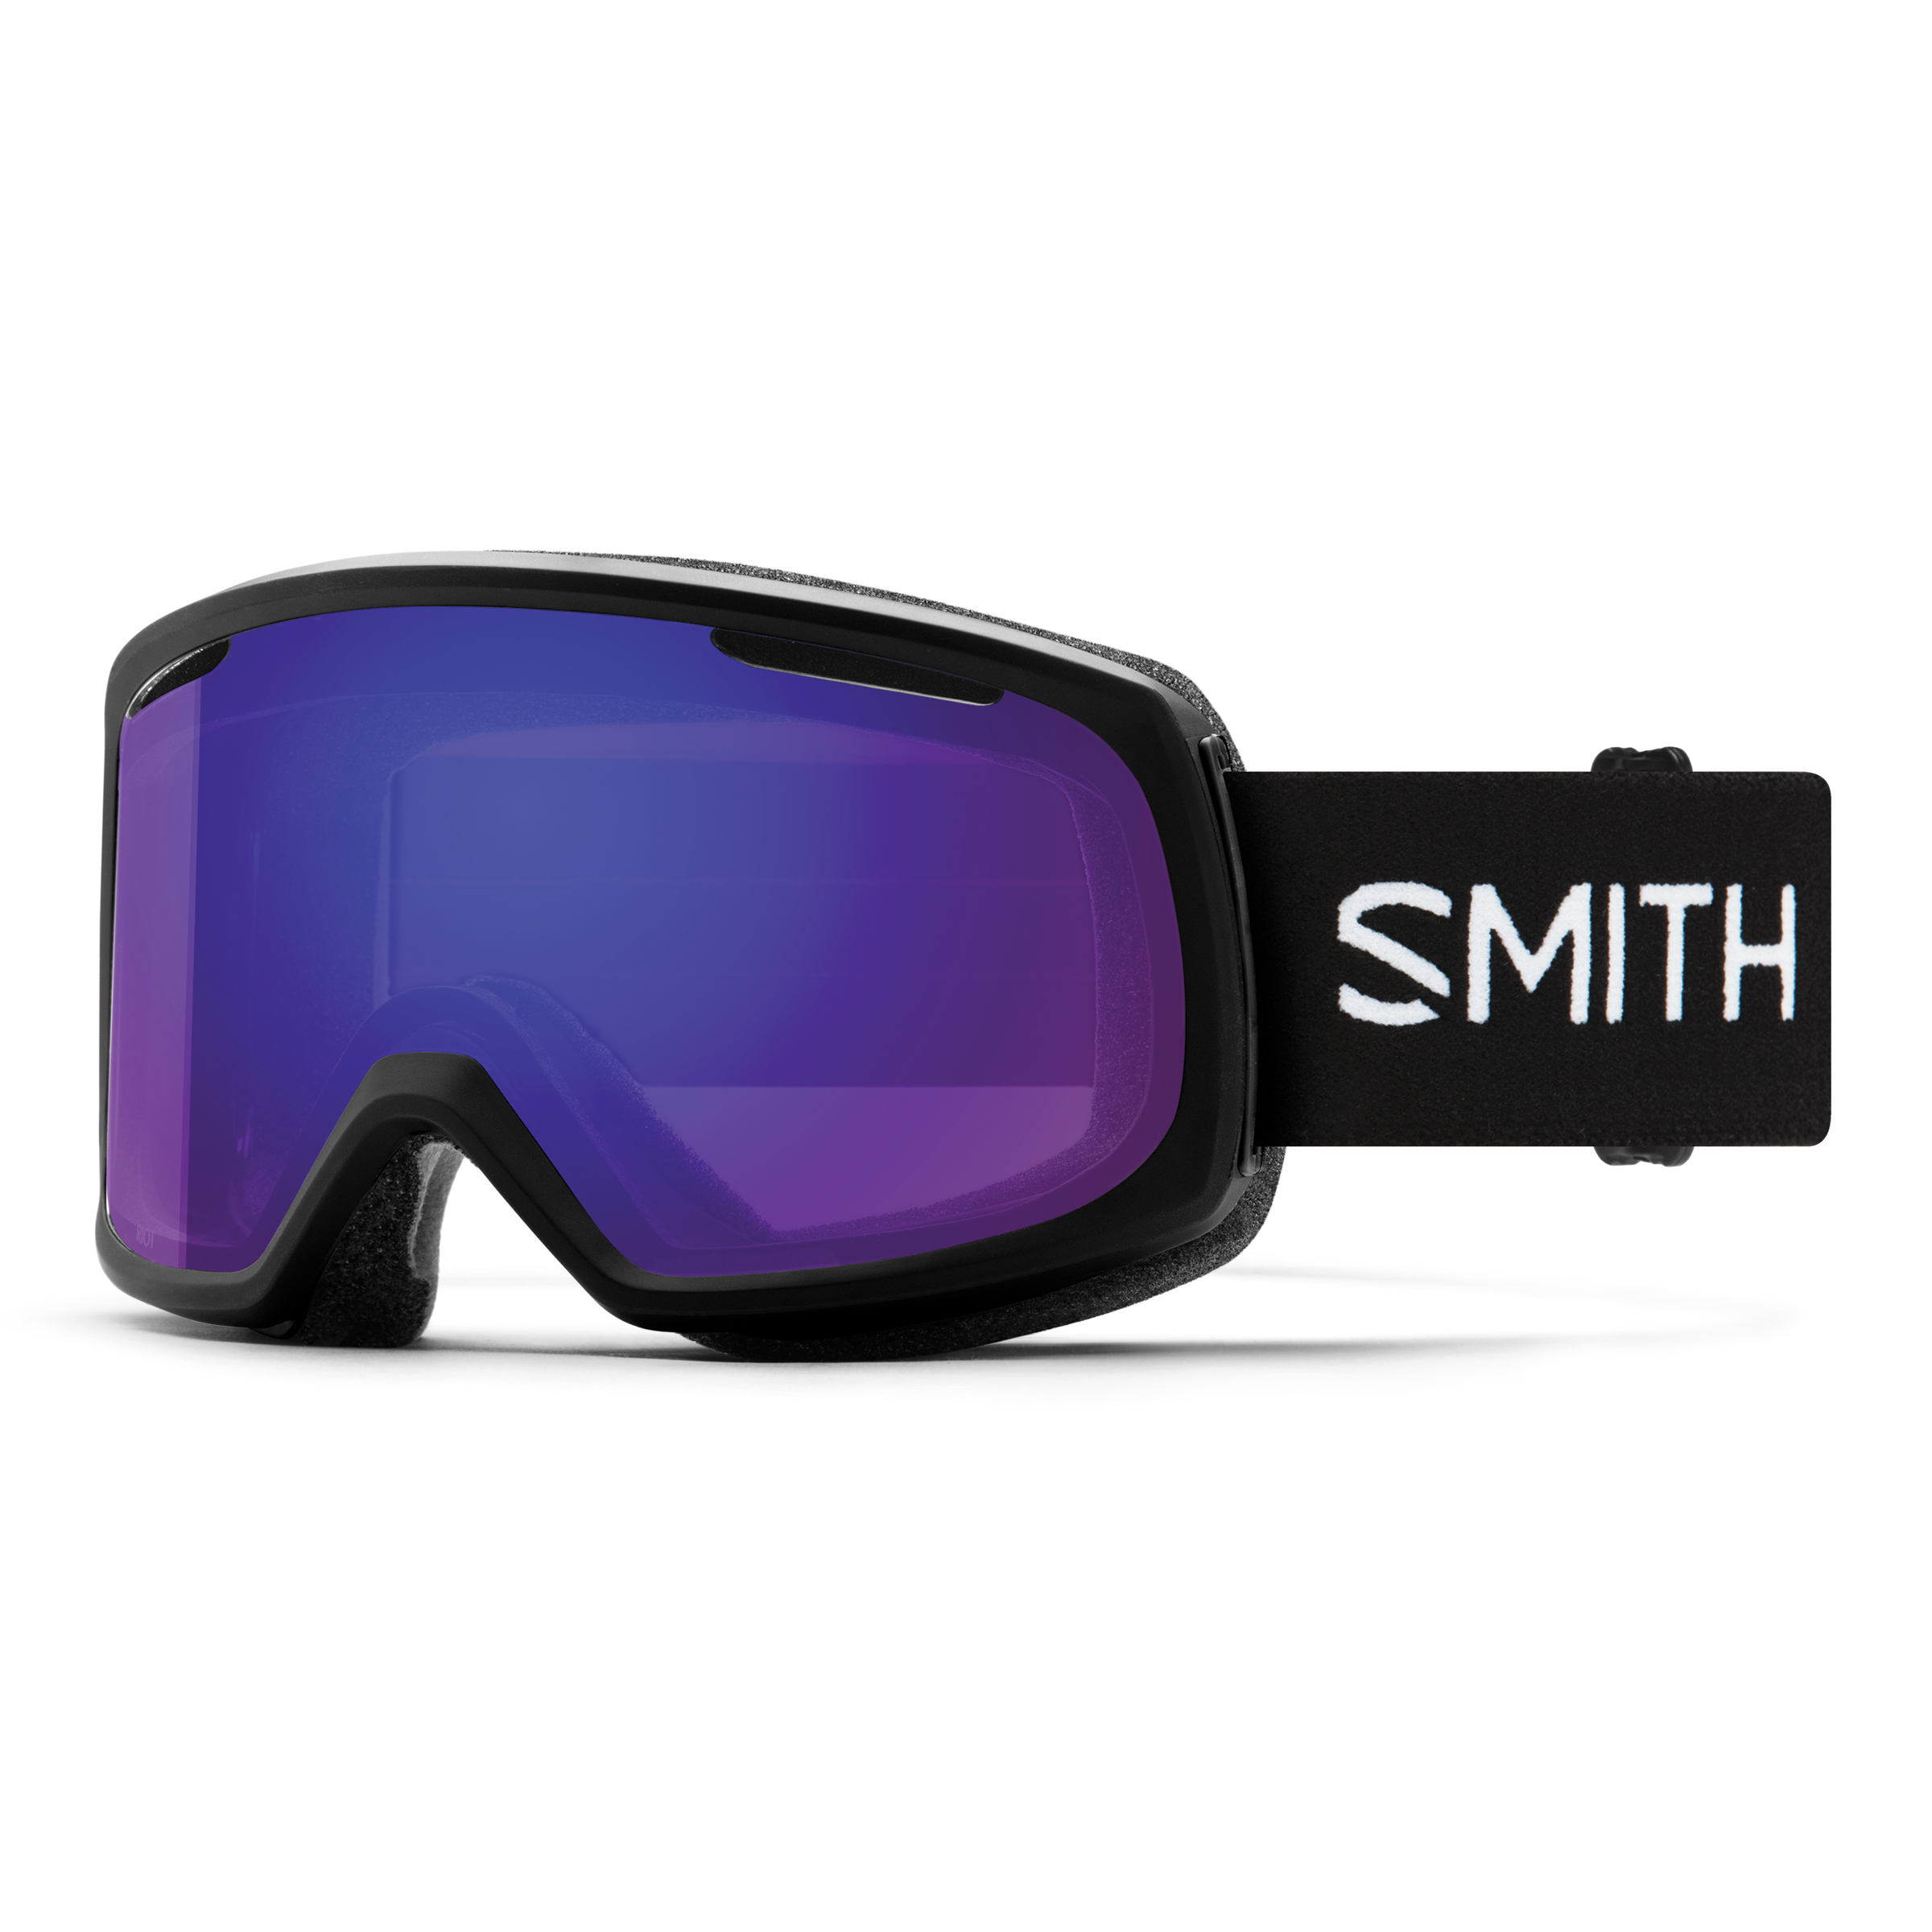 Smith Optics Large Black Vinyl Window Sticker Decal 18" x 6" Sunglasses Goggles